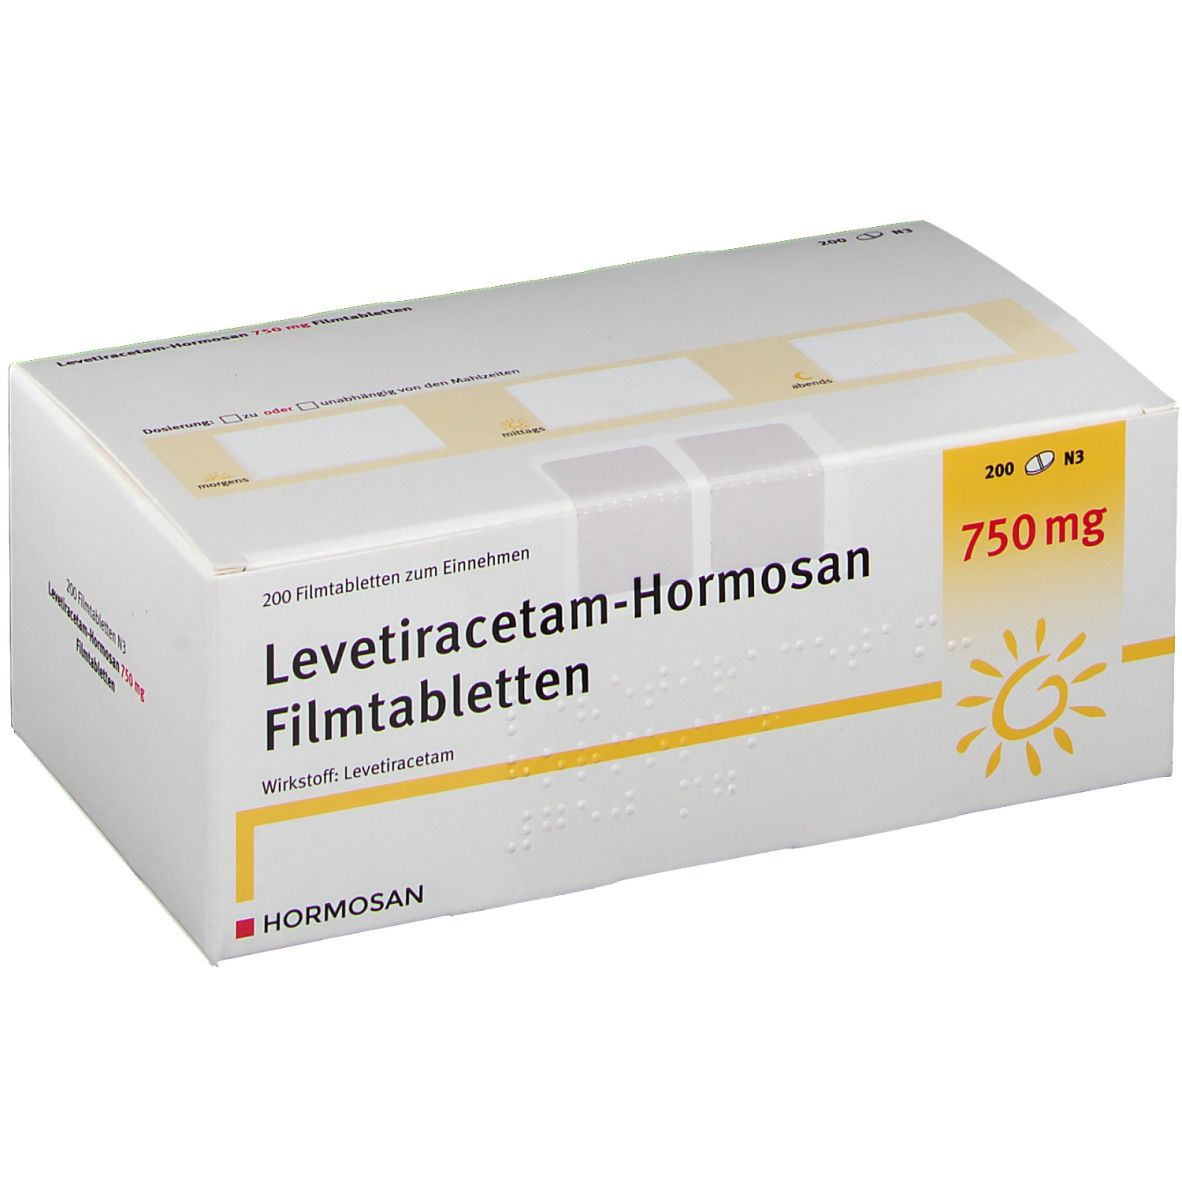 Levetiracetam-Hormosan 750 mg